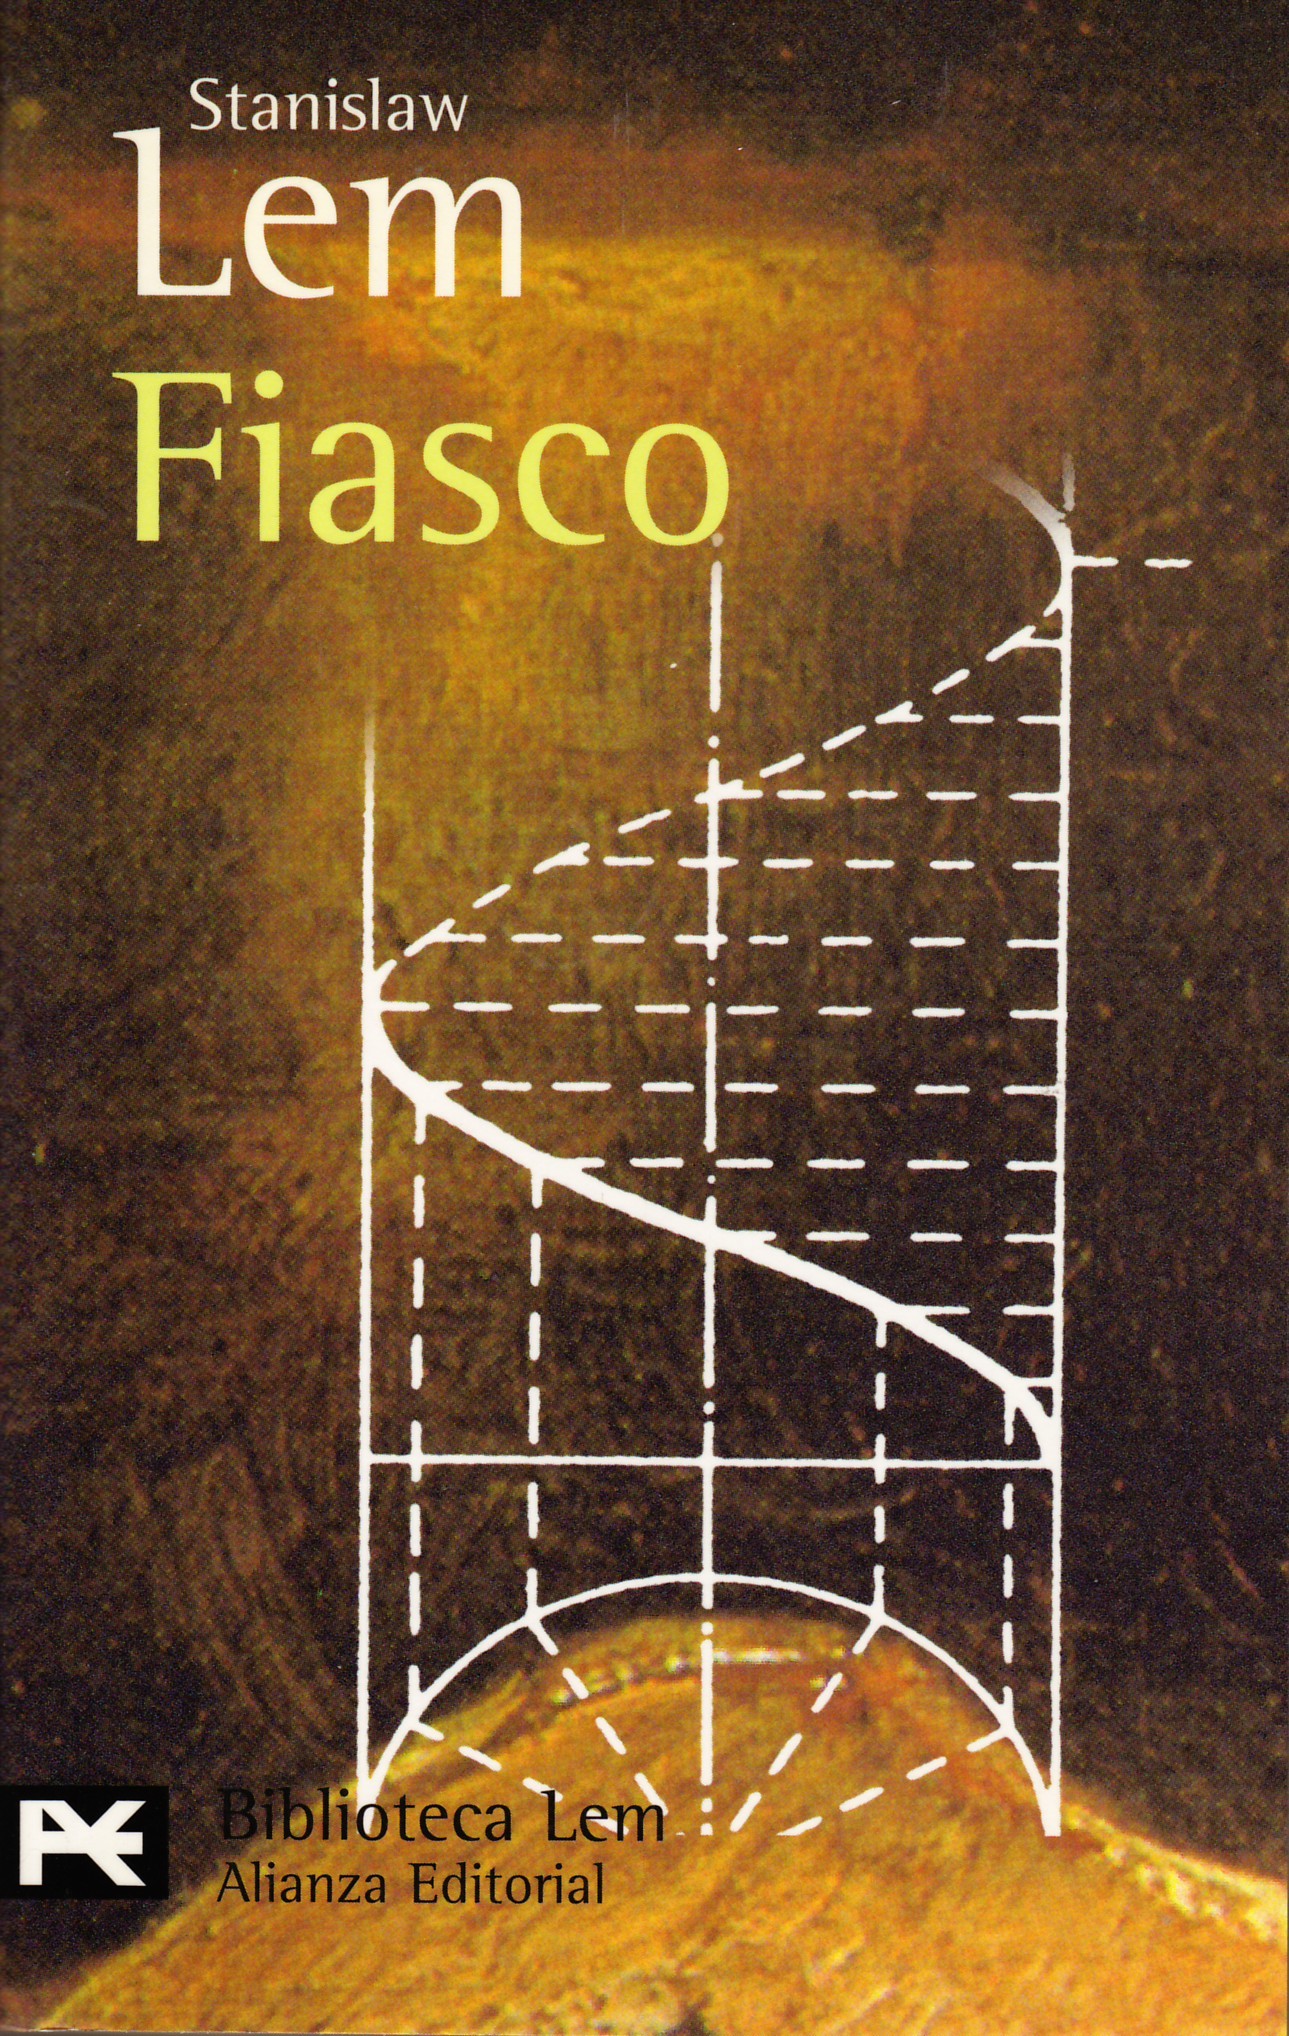 Fiasco Spanish Alianza Editorial 2005.jpg